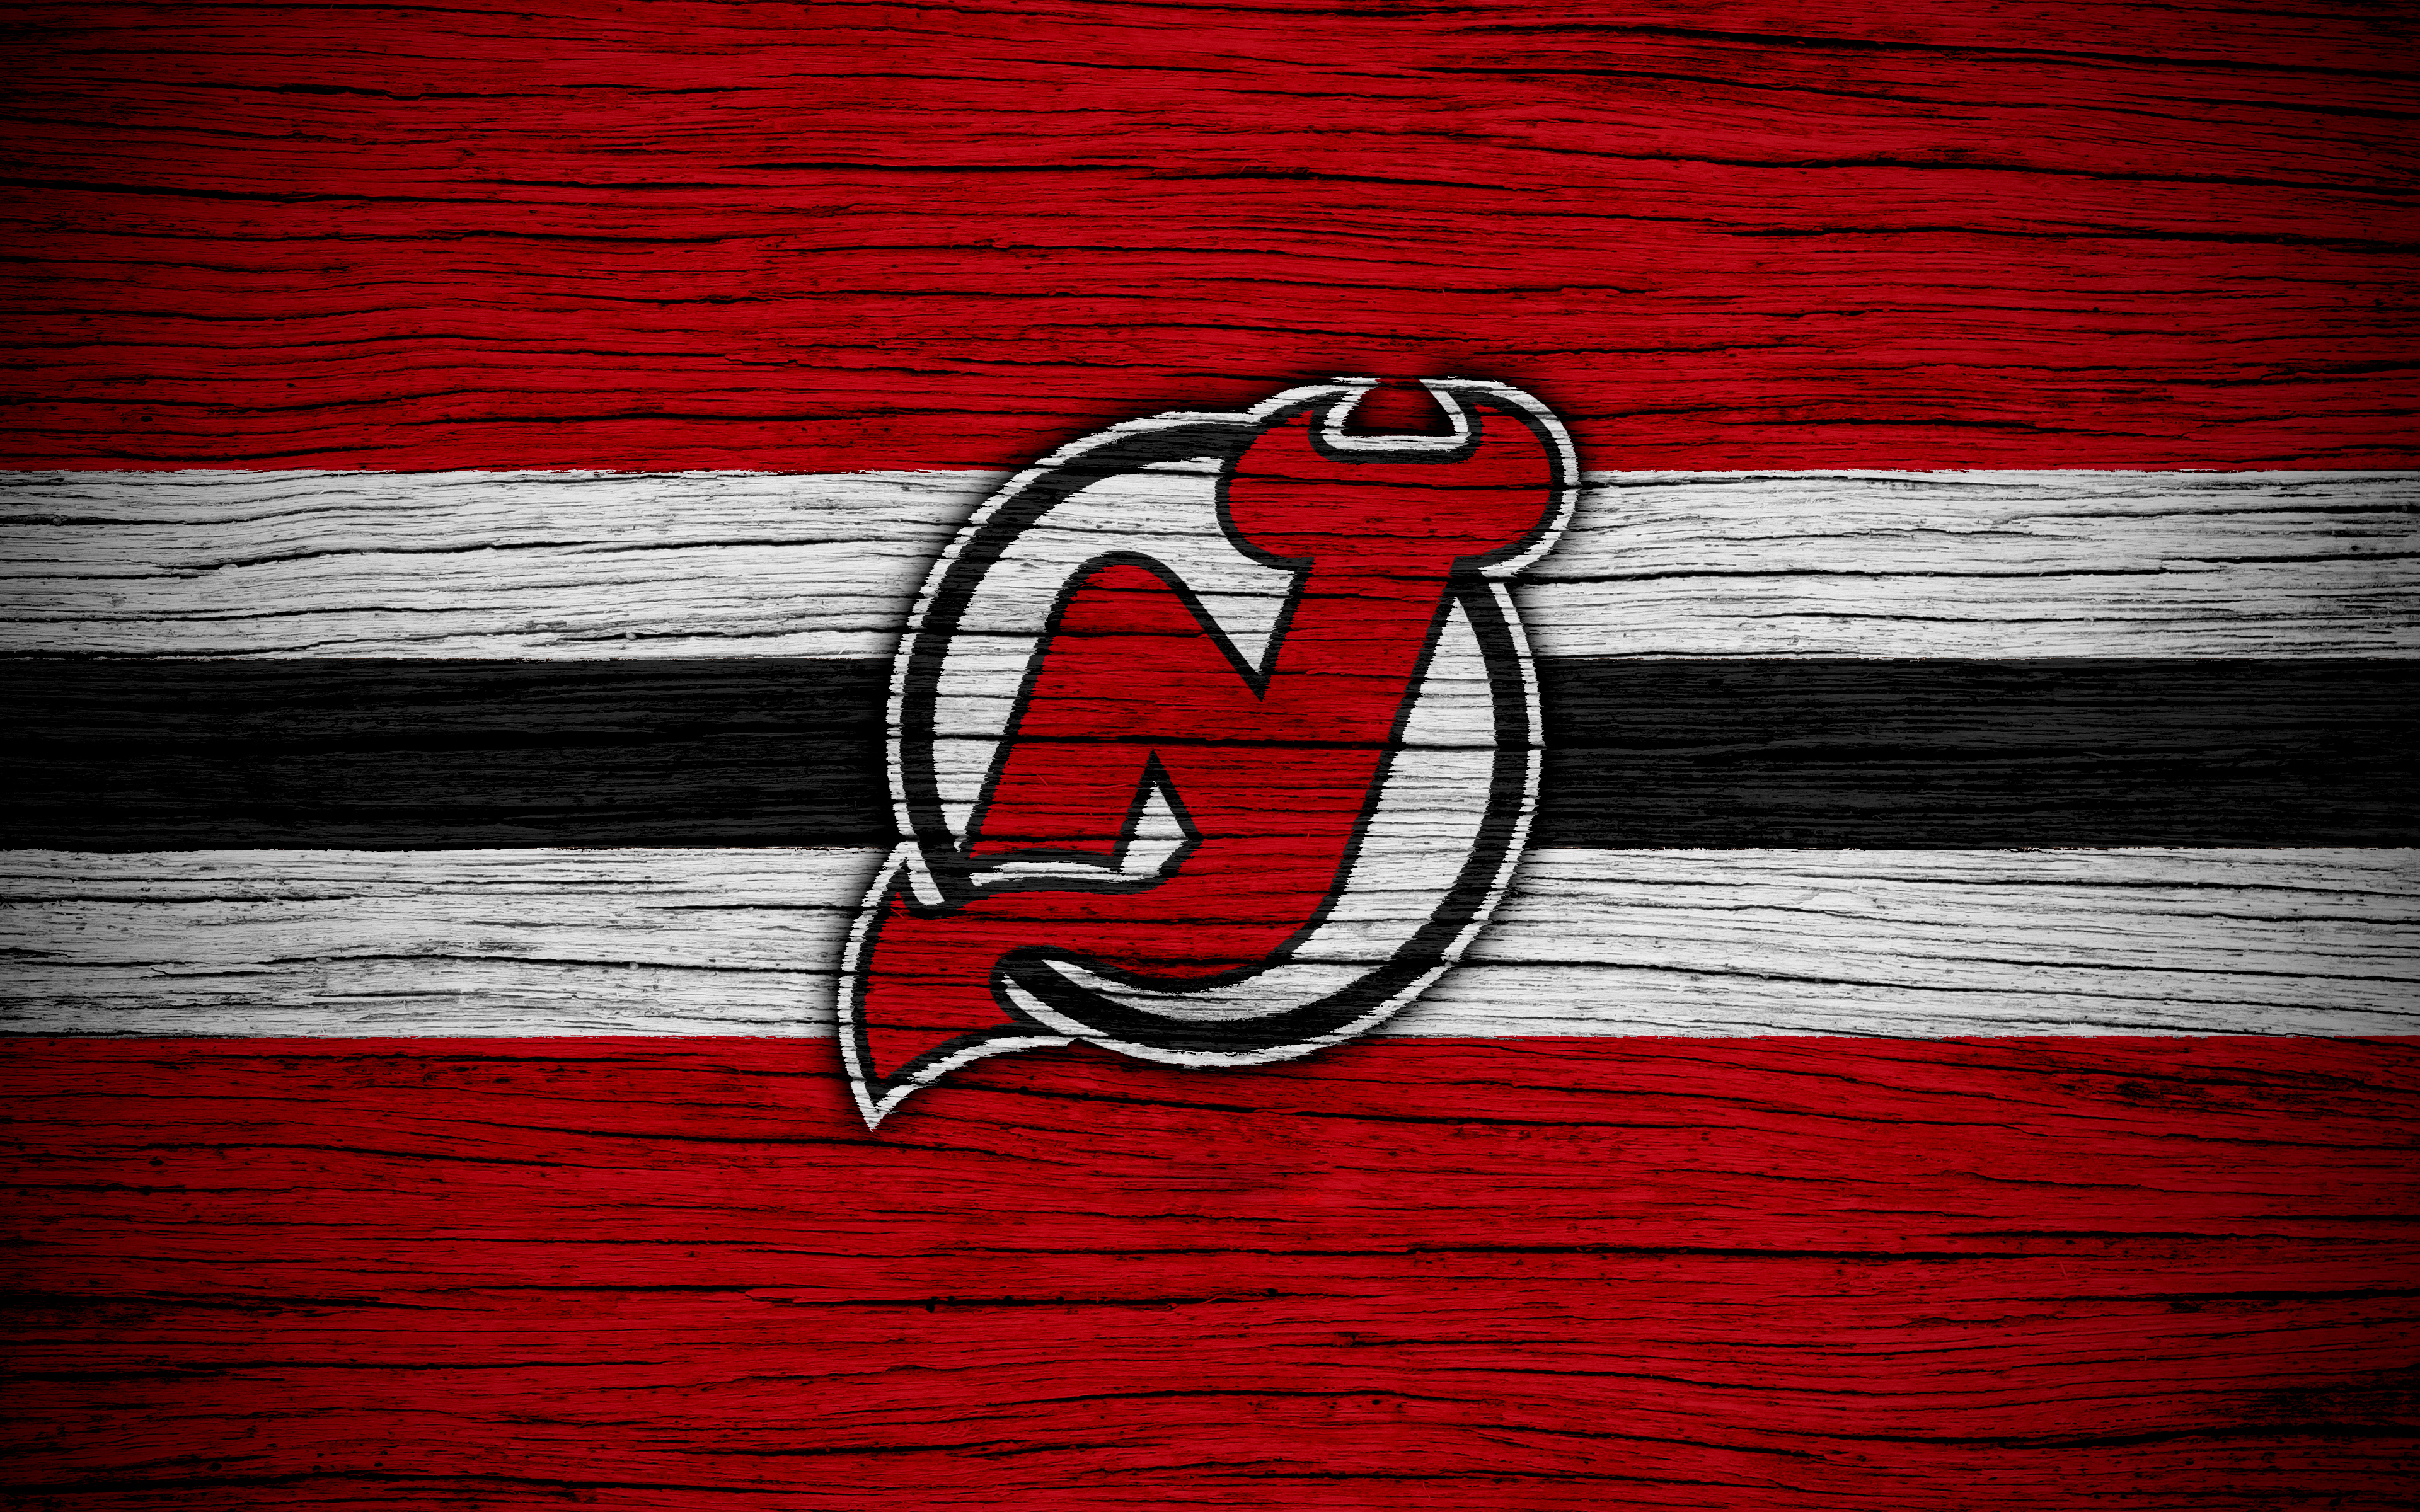 New jersey devils. Нью джерси Девилз. Нью-джерси Девилз эмблема. Обои Нью джерси Девилз. New Jersey Devils логотип.